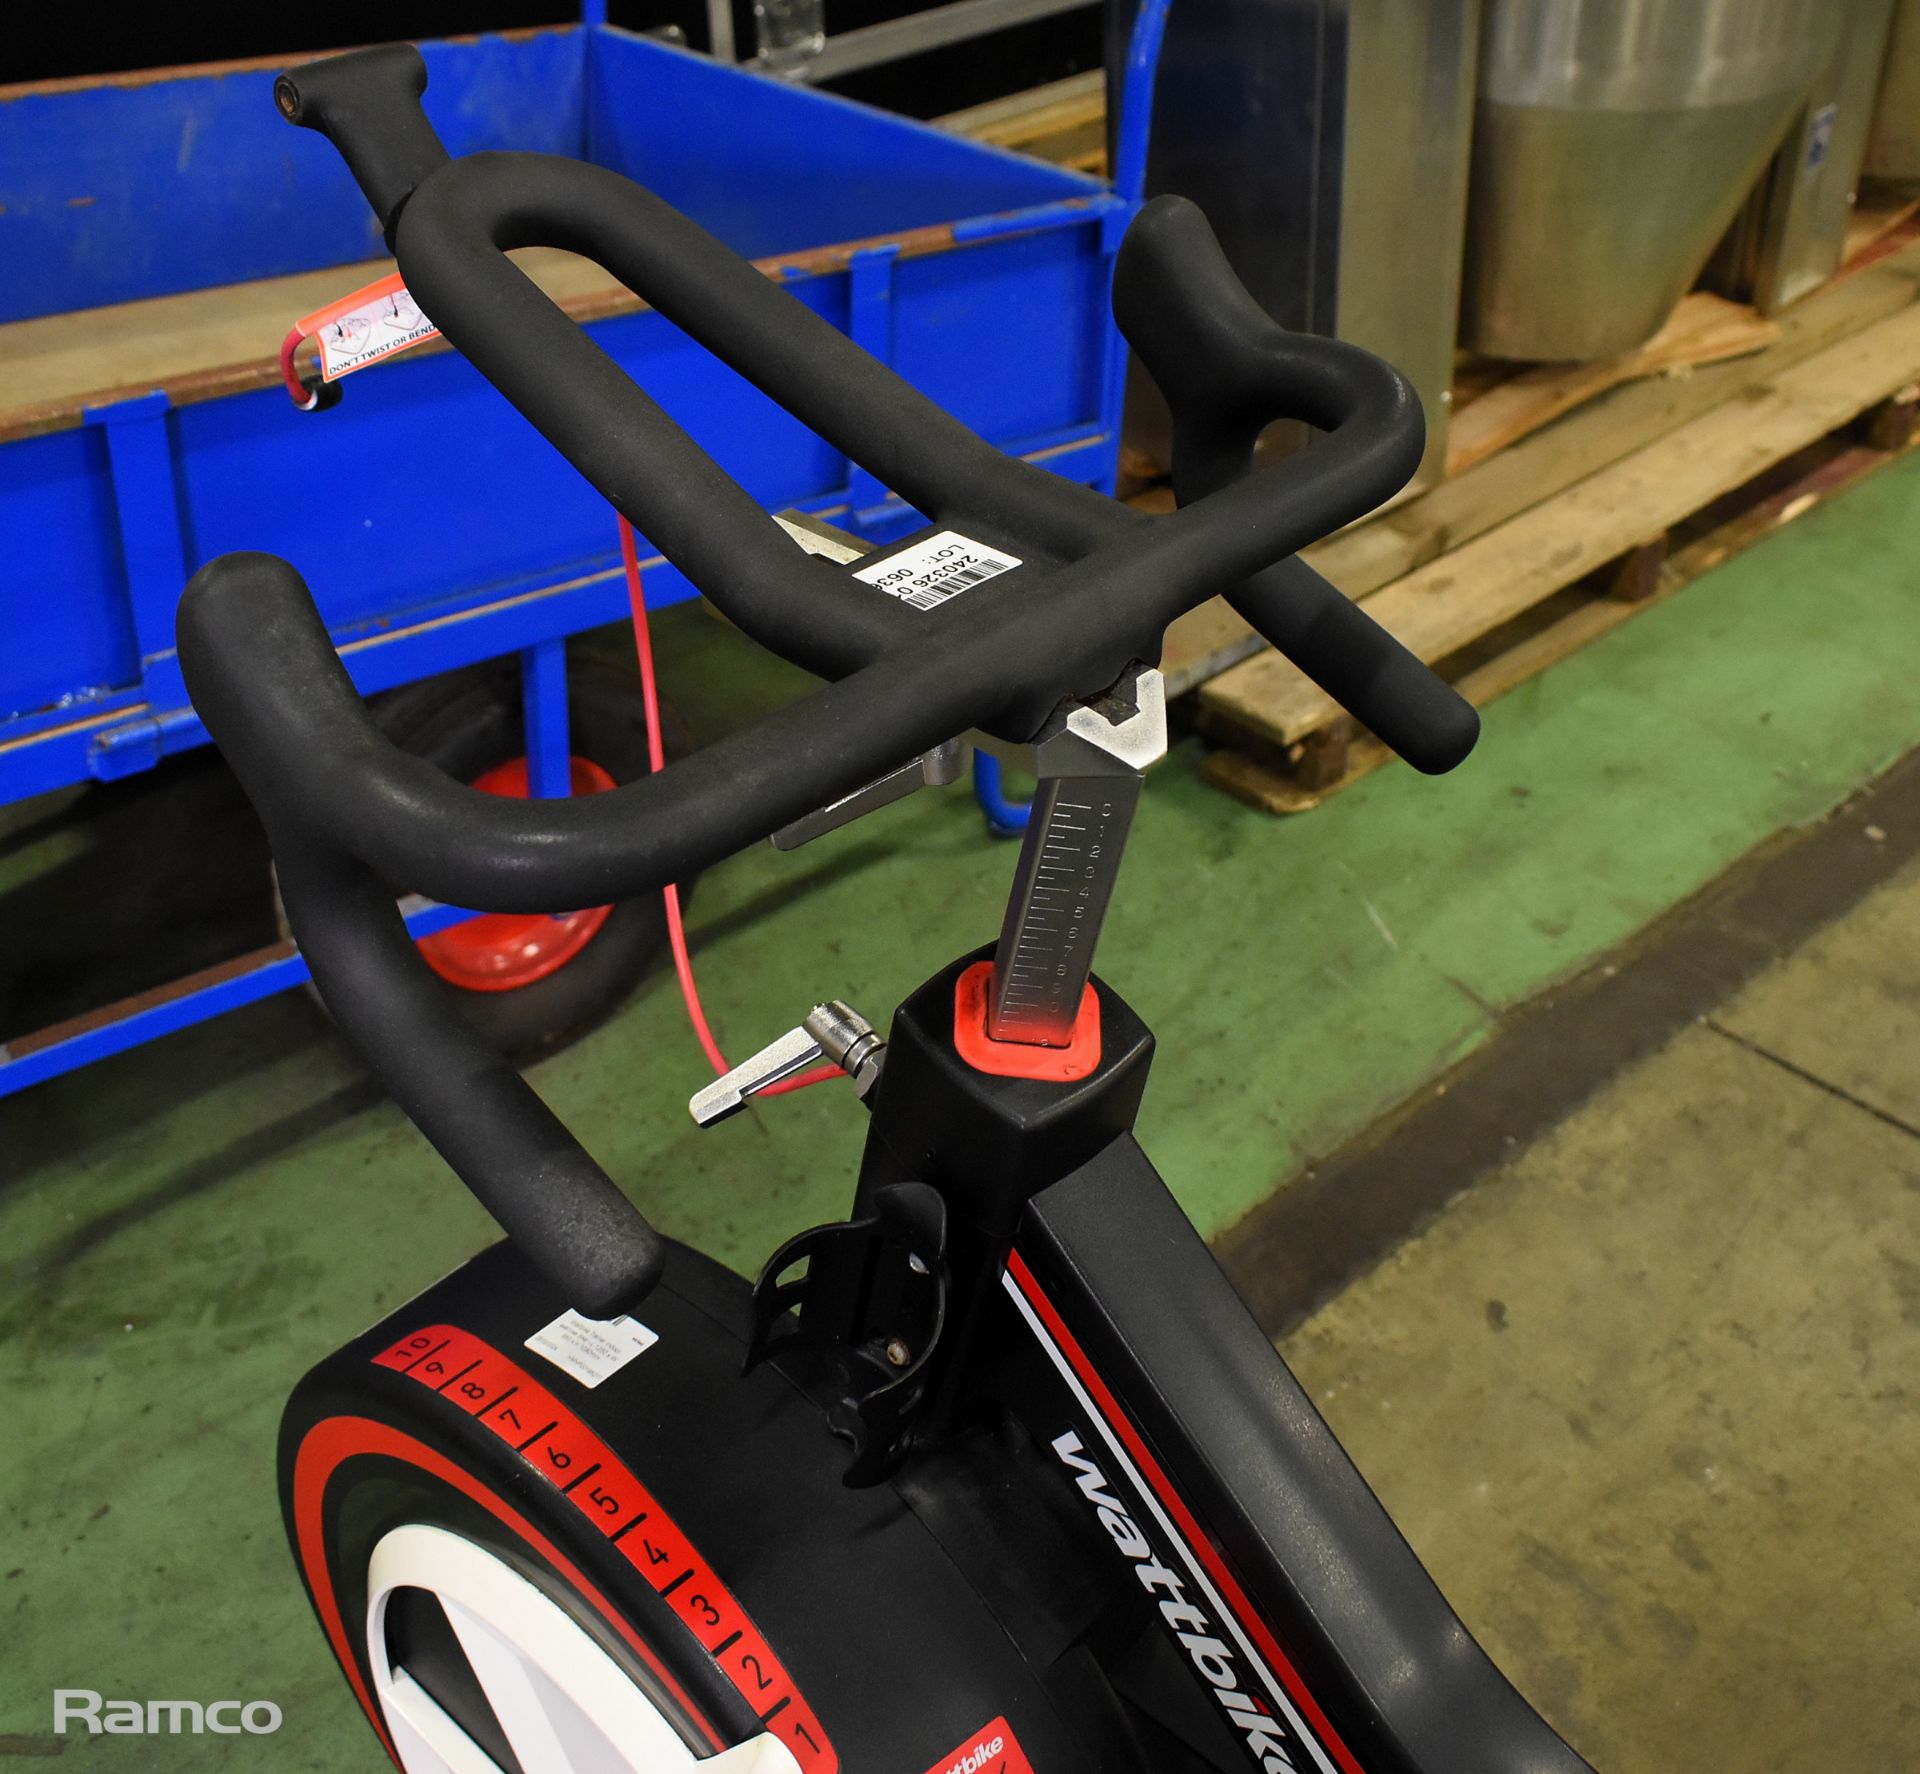 Wattbike Trainer indoor exercise bike - L 1250 x W 660 x H 1080mm - Image 4 of 8